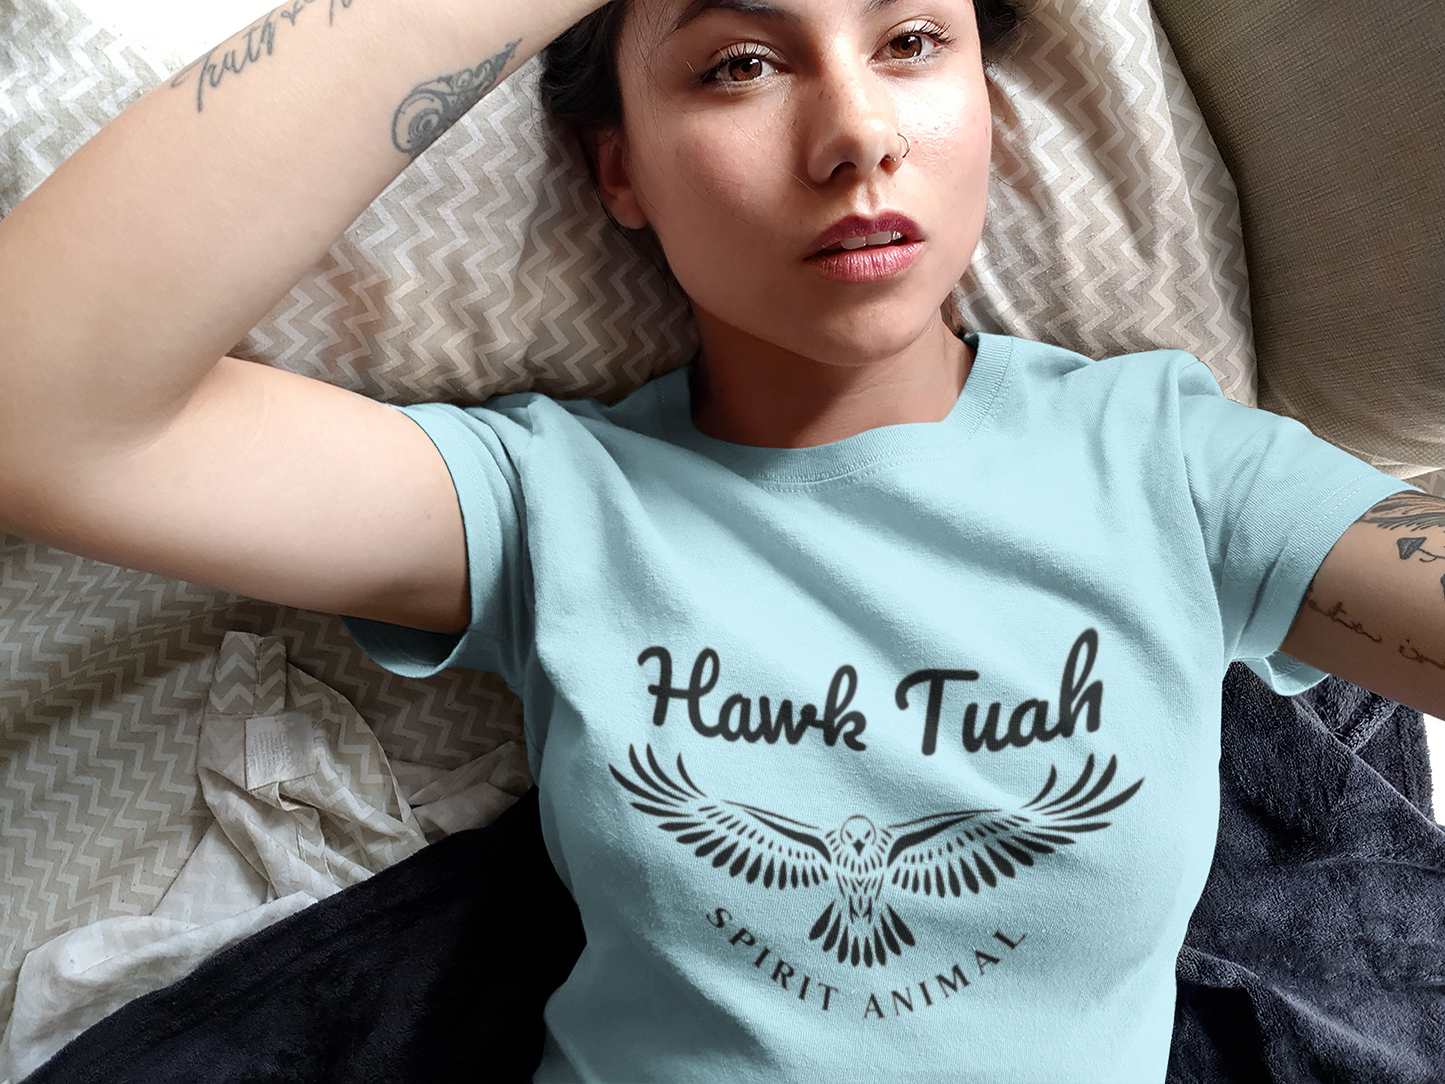 Hawk Tuah Spirit Animal Native American T Shirt funny viral TikTok Shirt (Multiple Color Options)